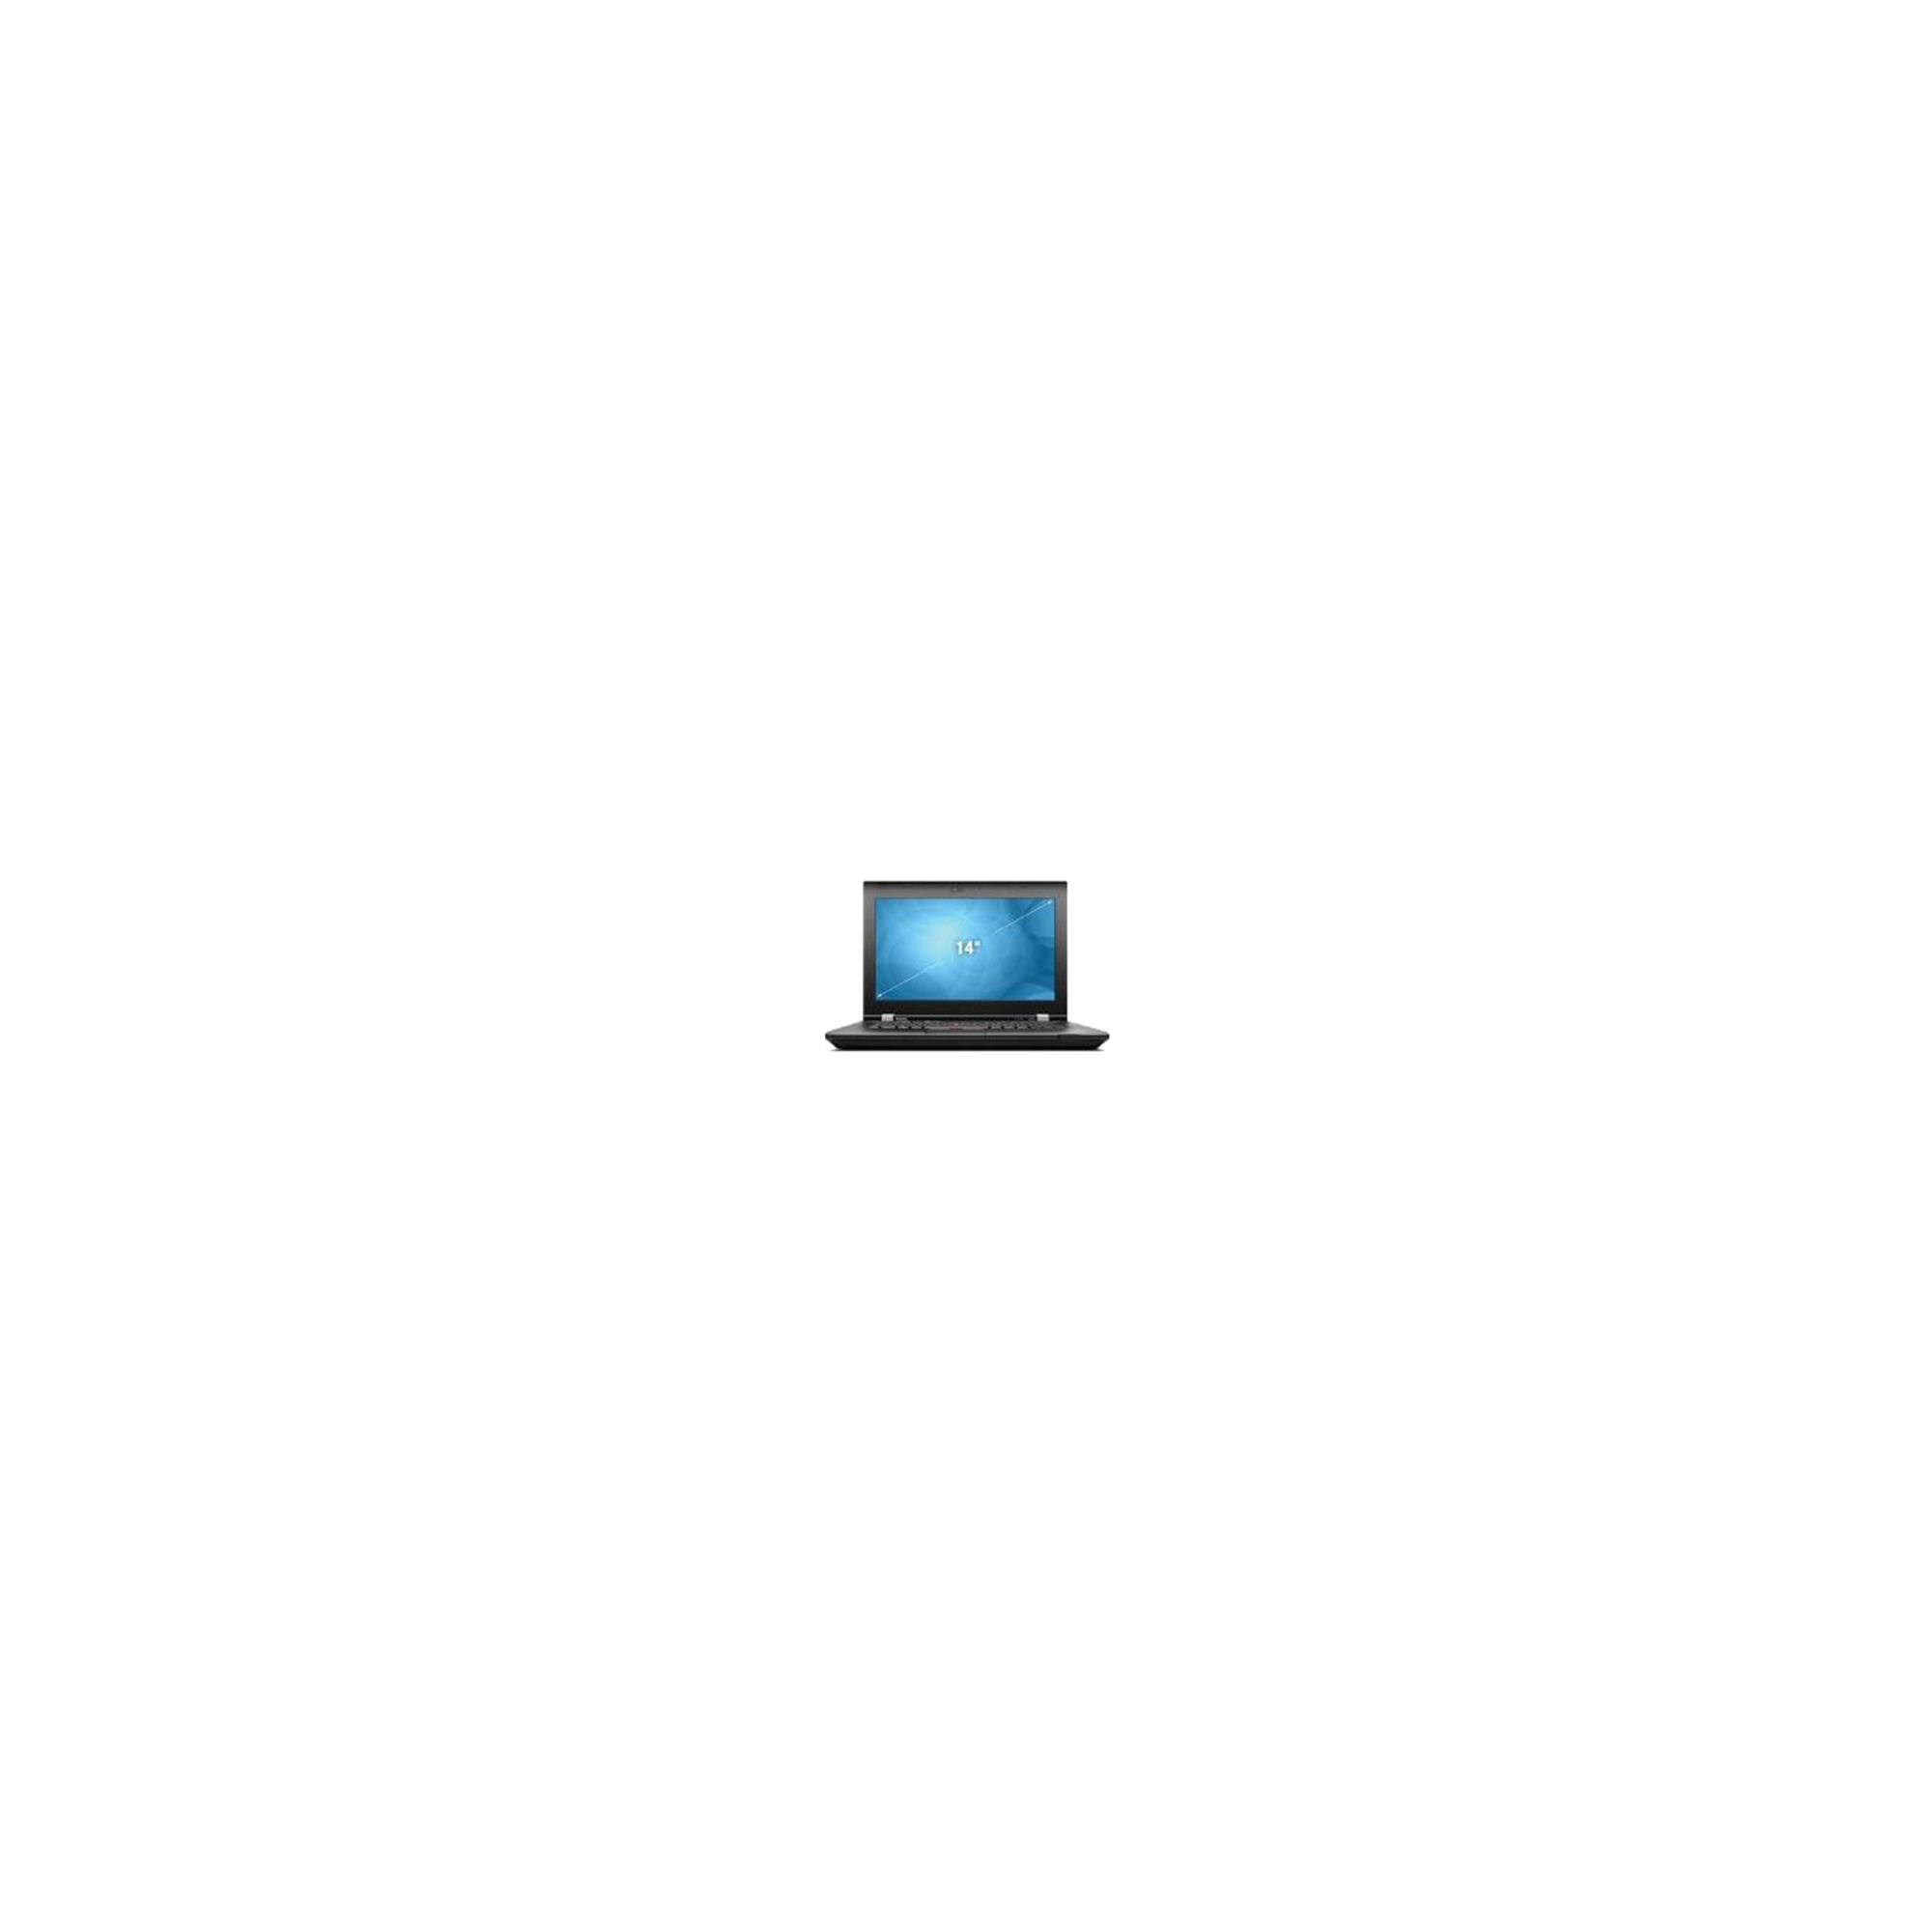 Lenovo ThinkPad L430 24683PG (14.0 inch) Notebook Core i5 (3210M) 2.5GHz 4GB 500GB DVD±RW WLAN BT Webcam Windows 7 Pro 64-bit/Windows 8 Pro 64-bit at Tesco Direct